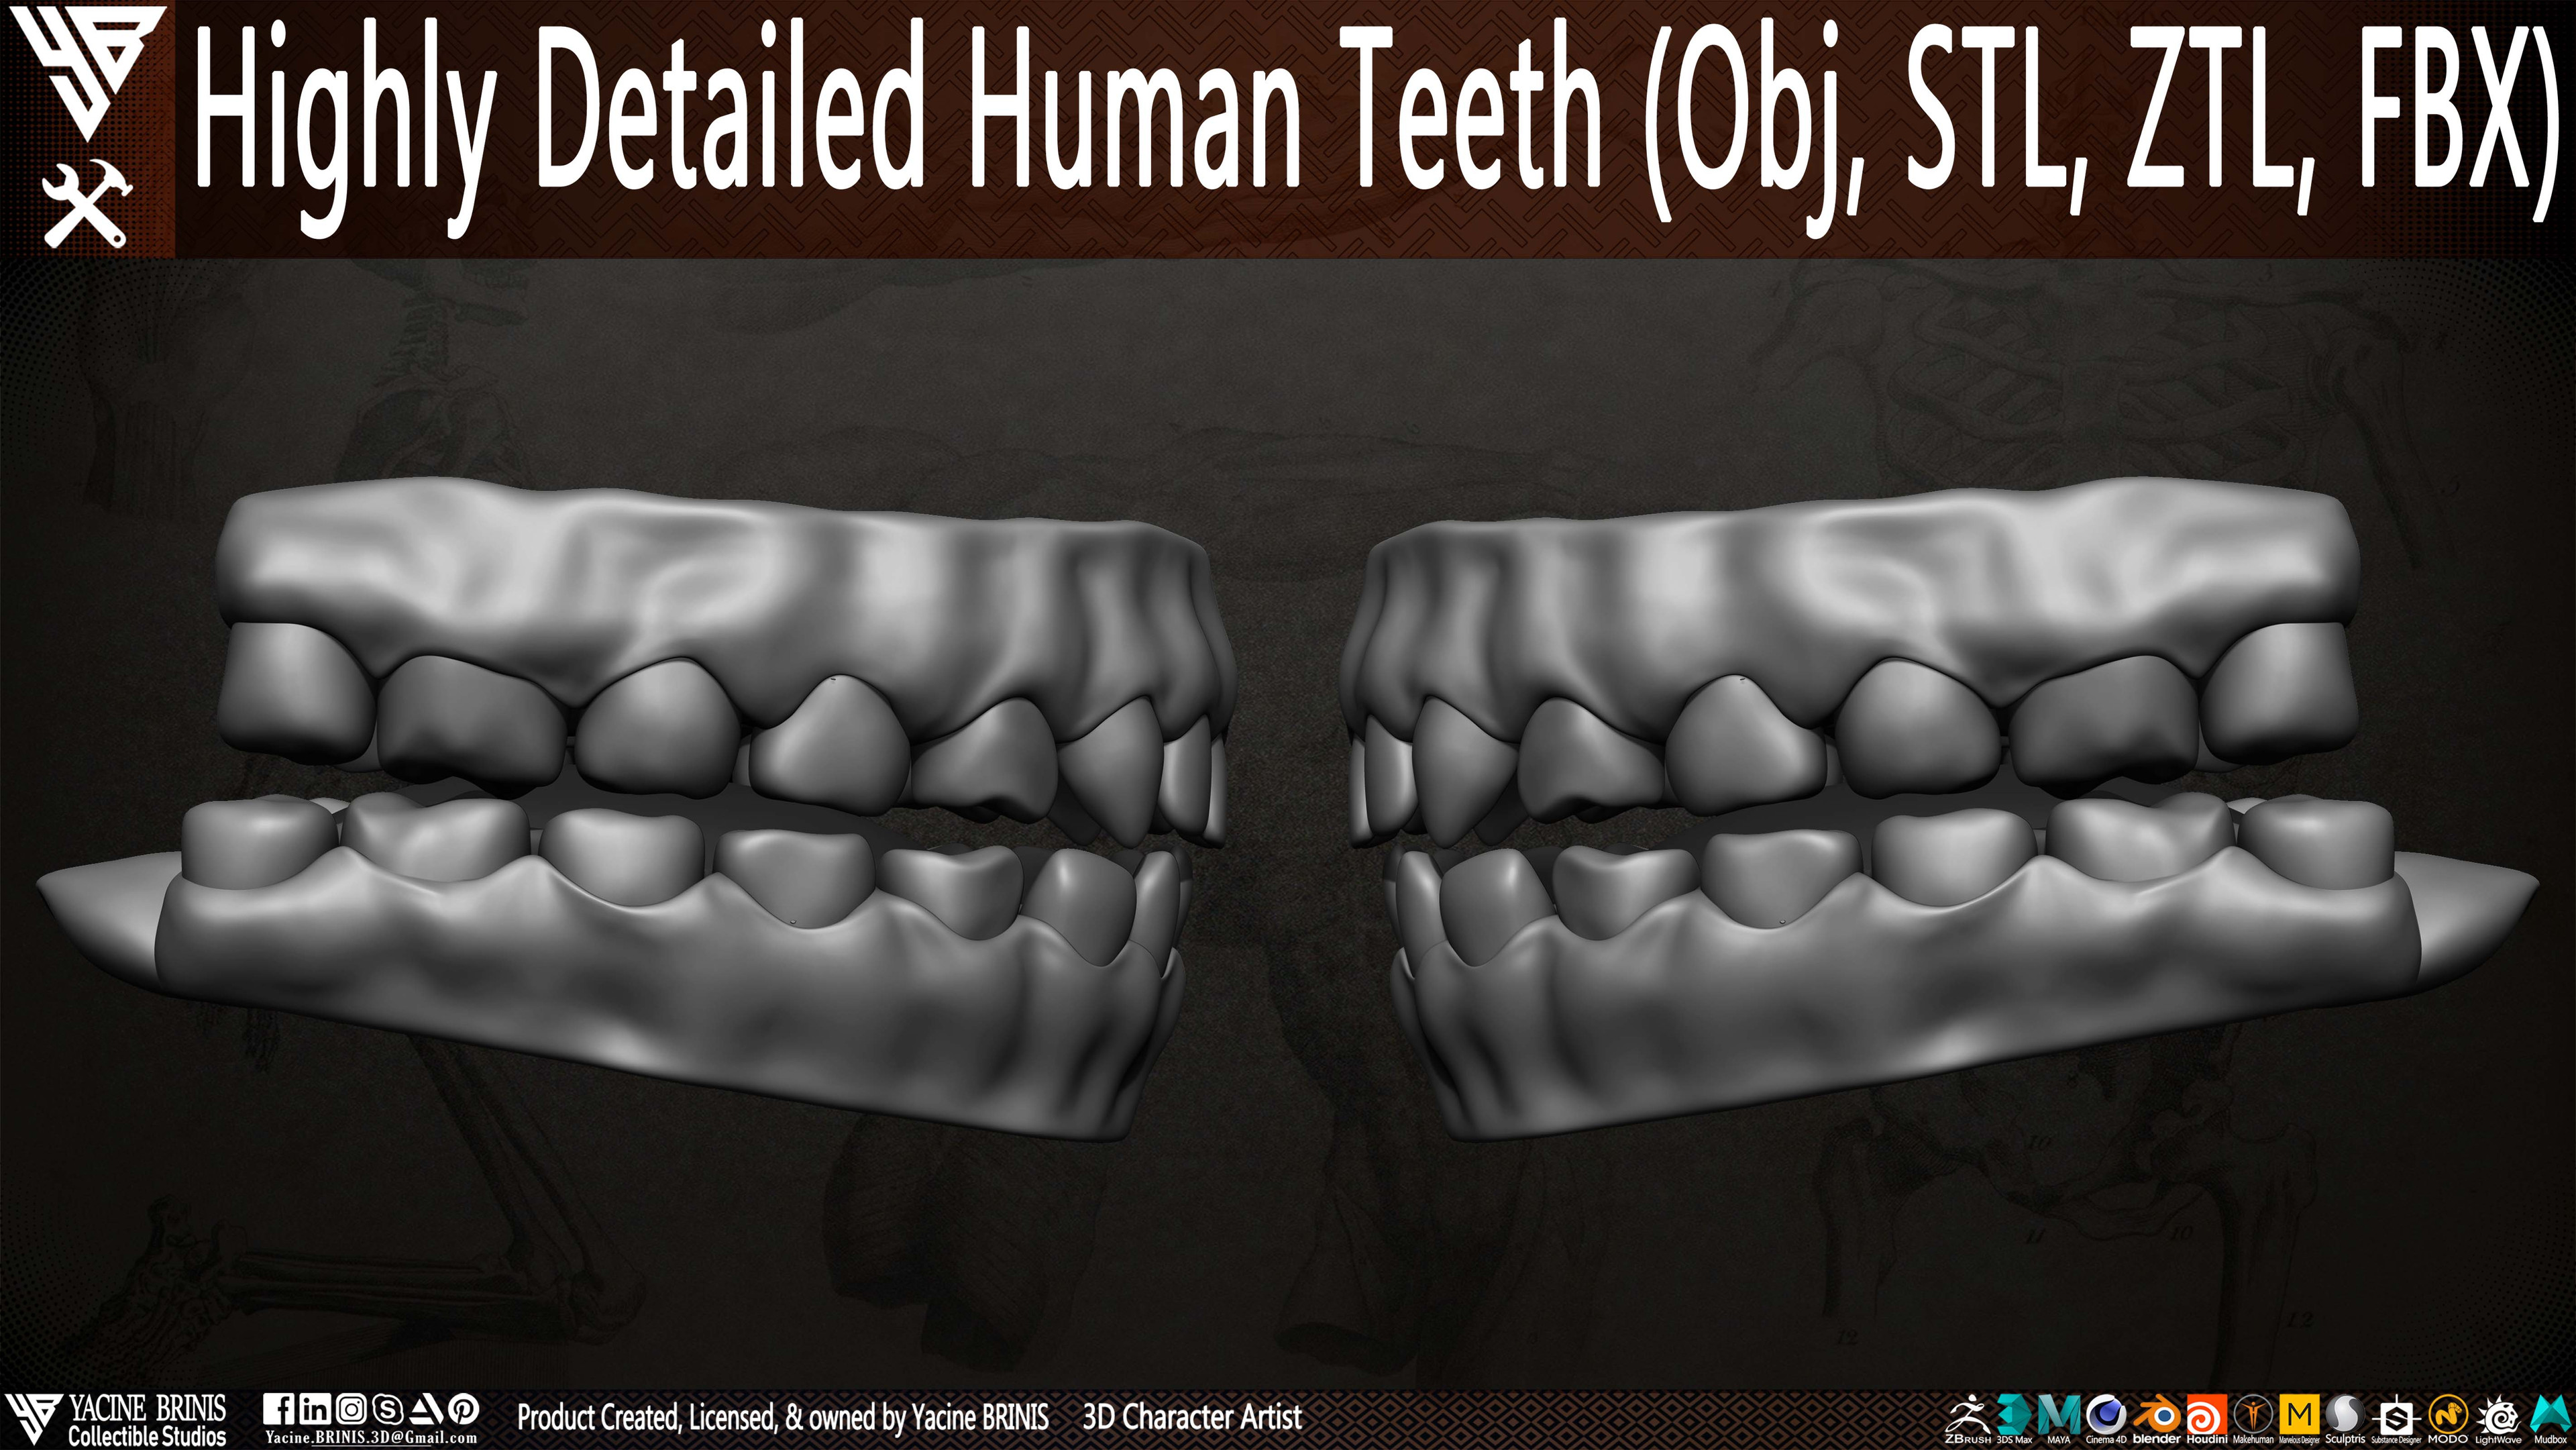 Highly Detailed Human Teeth sculpted by Yacine BRINIS 003